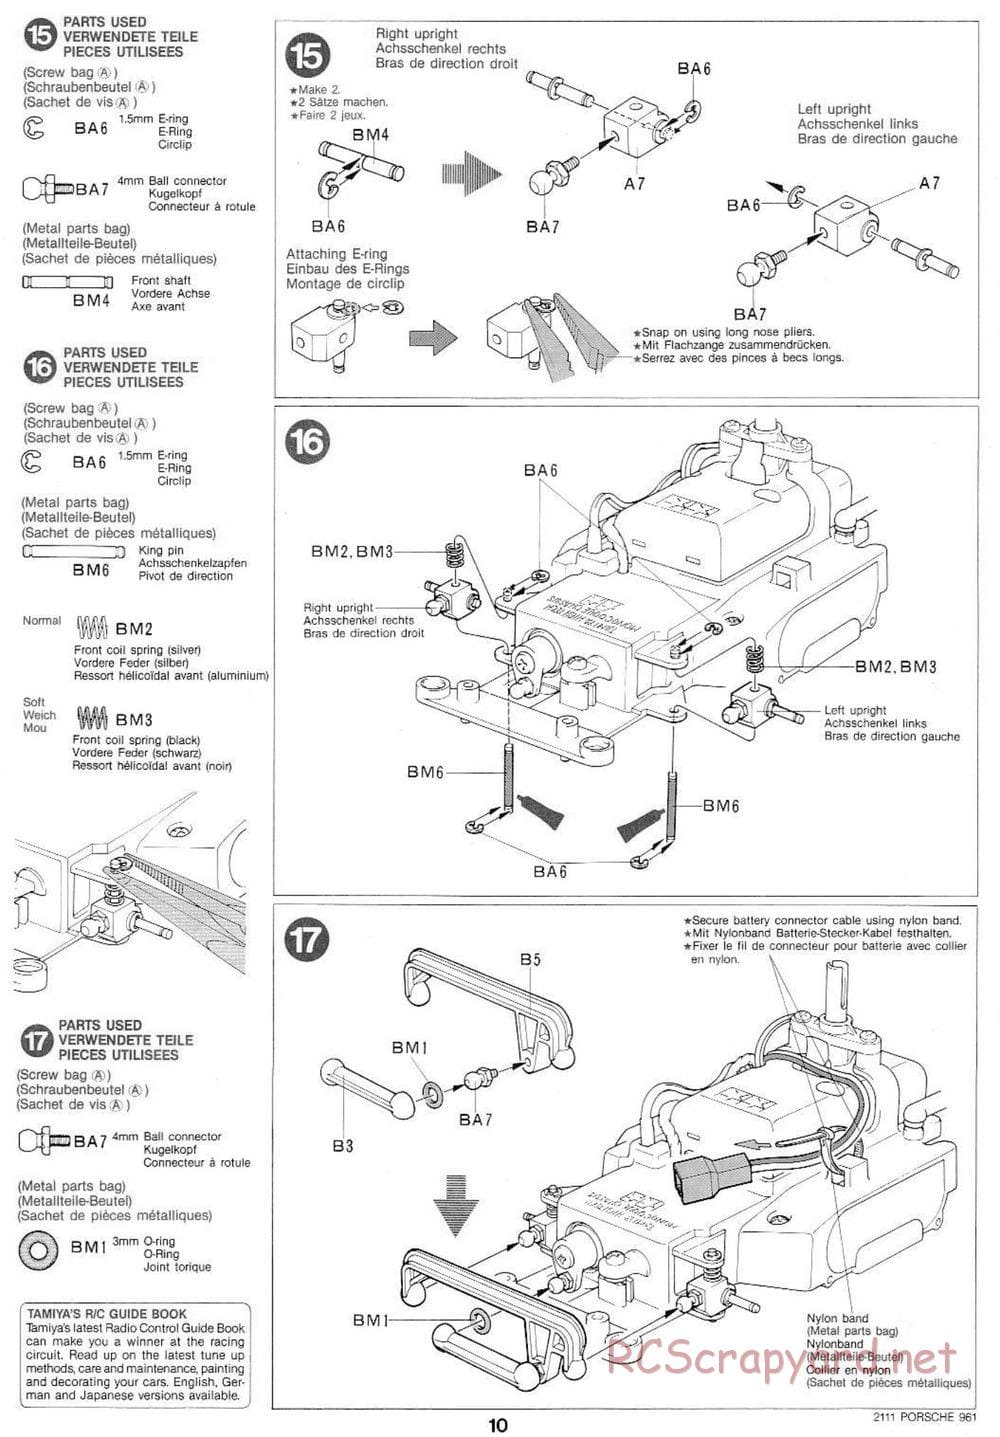 Tamiya - Tamtech - Porsche 961 Chassis - Manual - Page 10